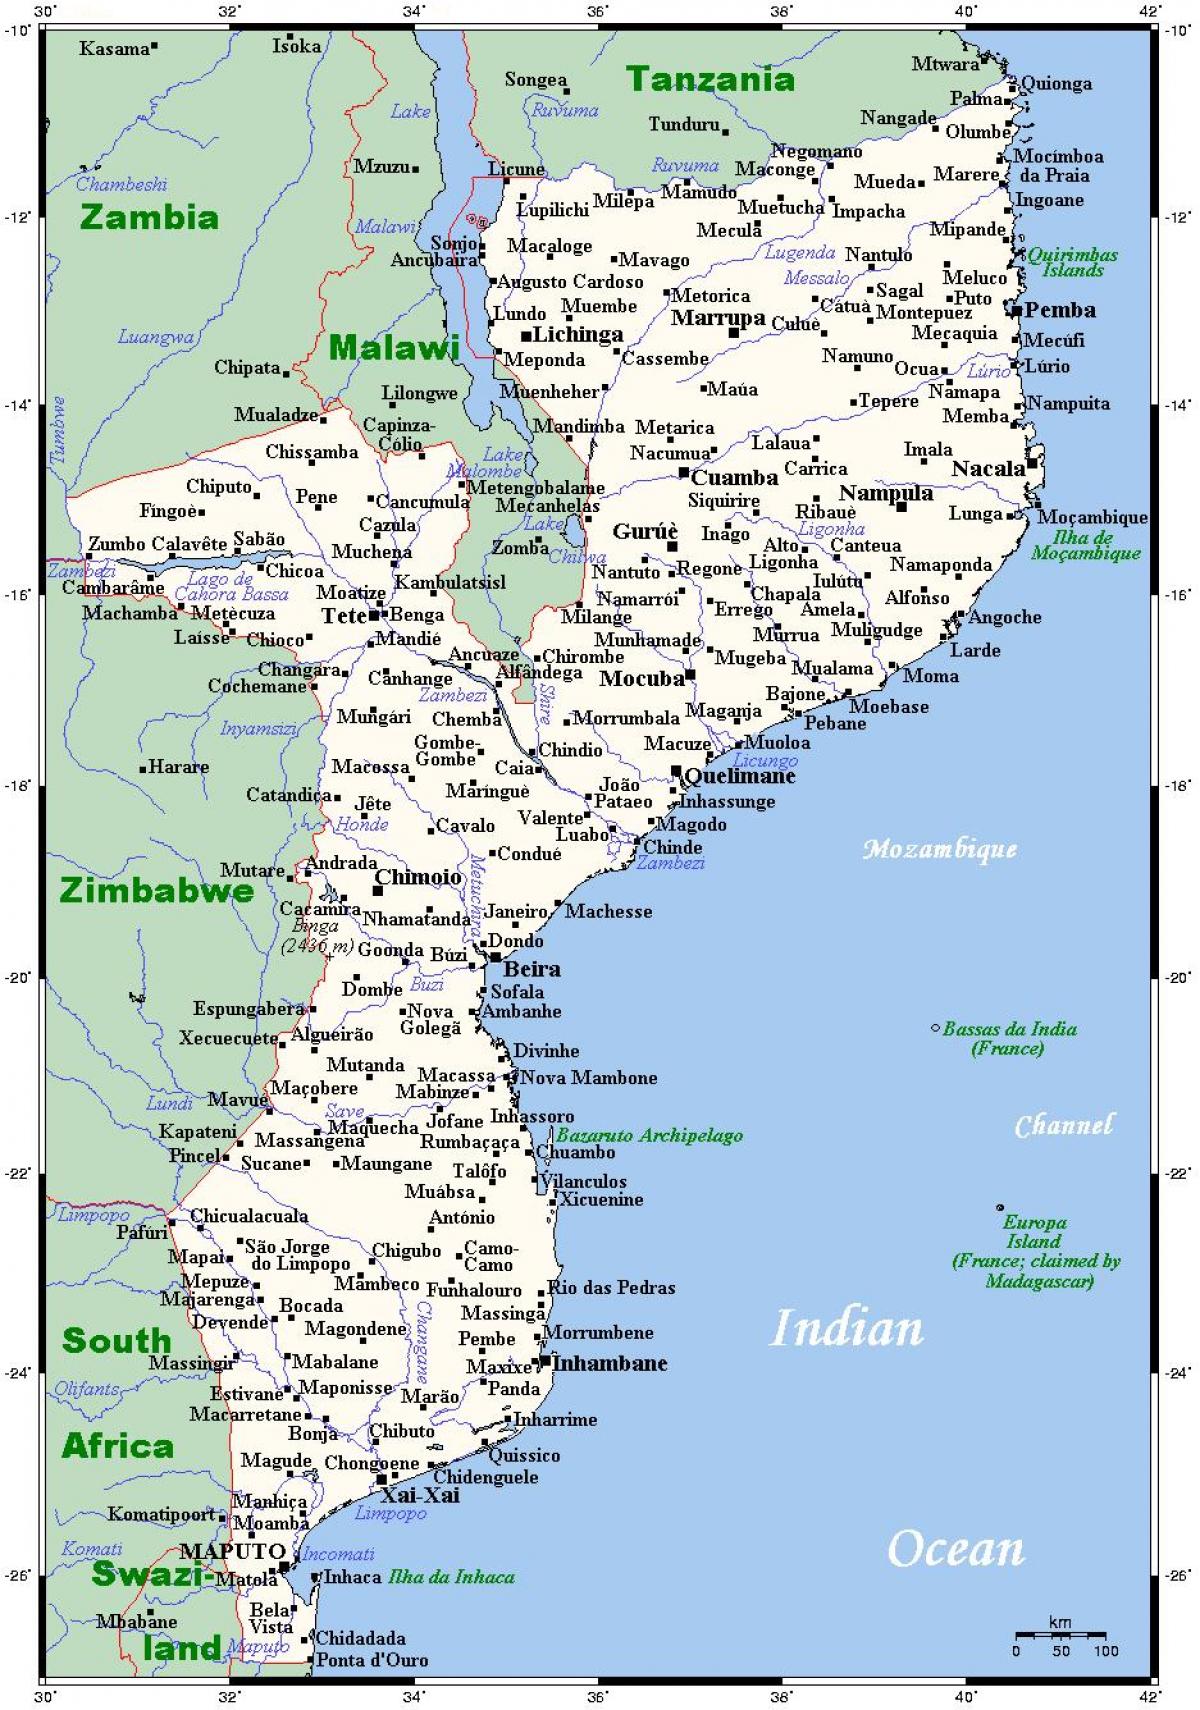 kort over Mozambique byer